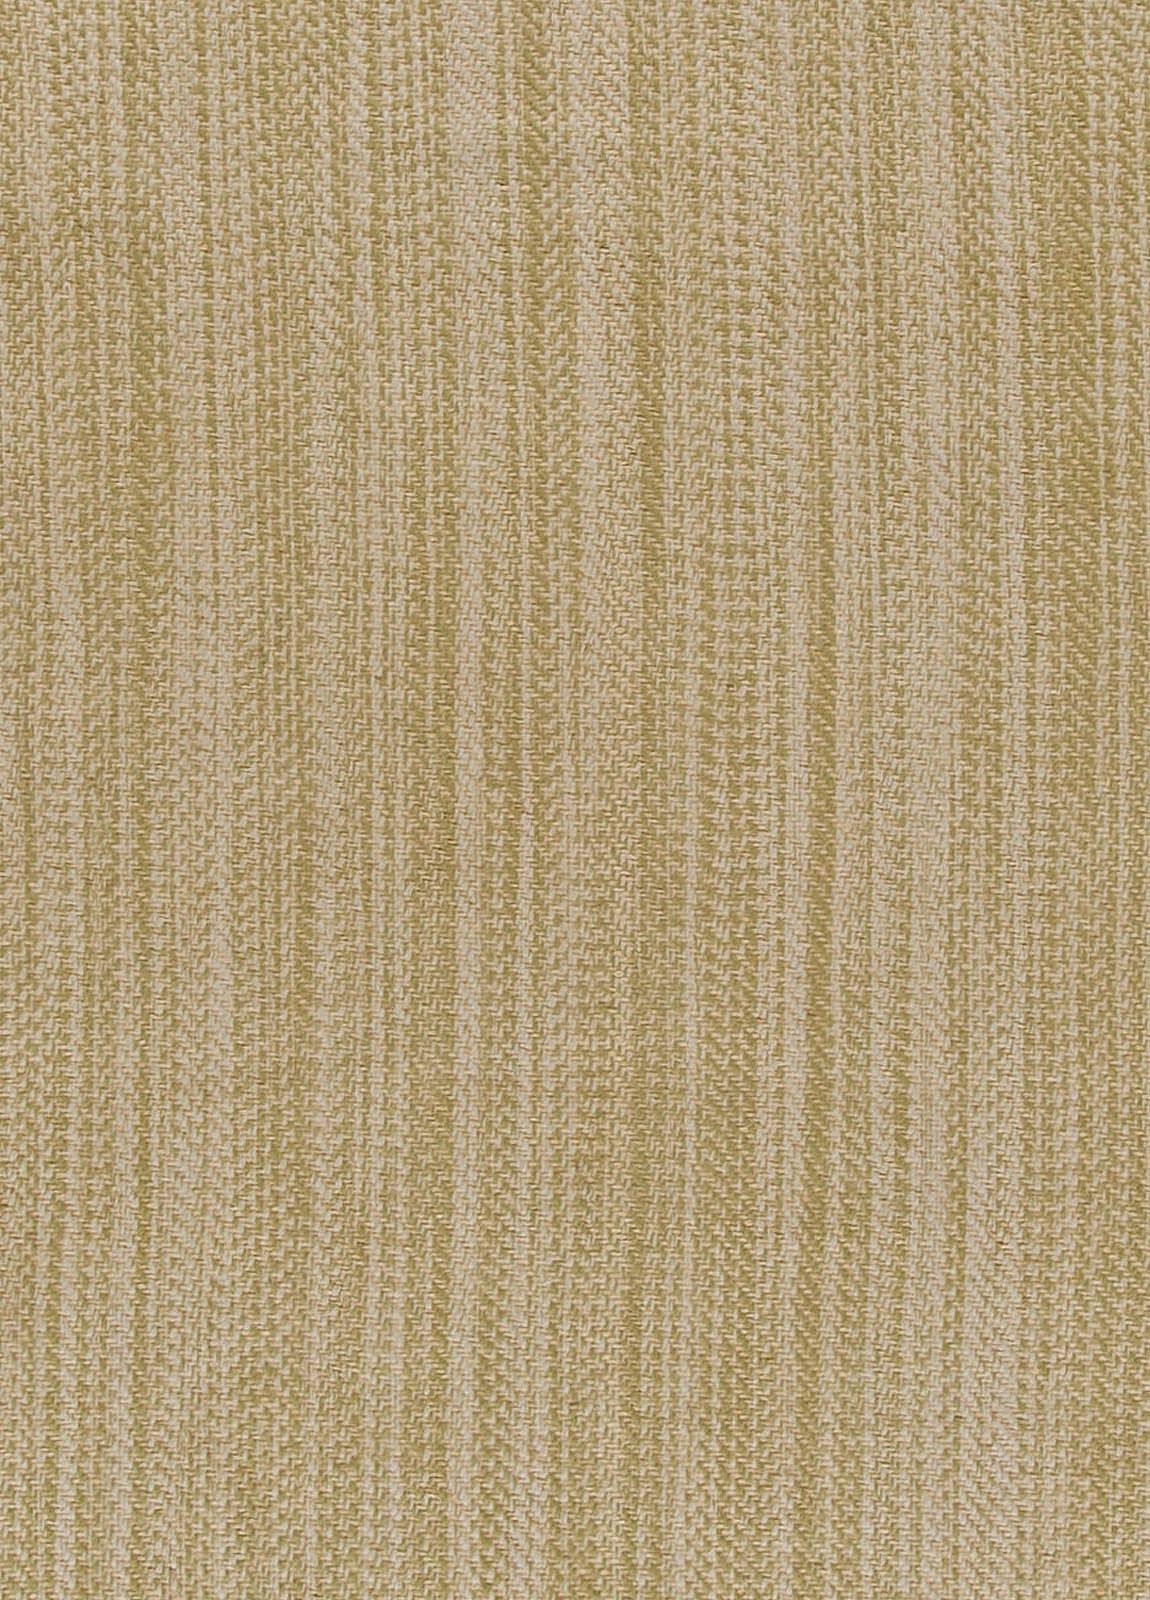 Large Striped De Lys beige flat-weave wool rug by Doris Leslie Blau
Size: 14'0